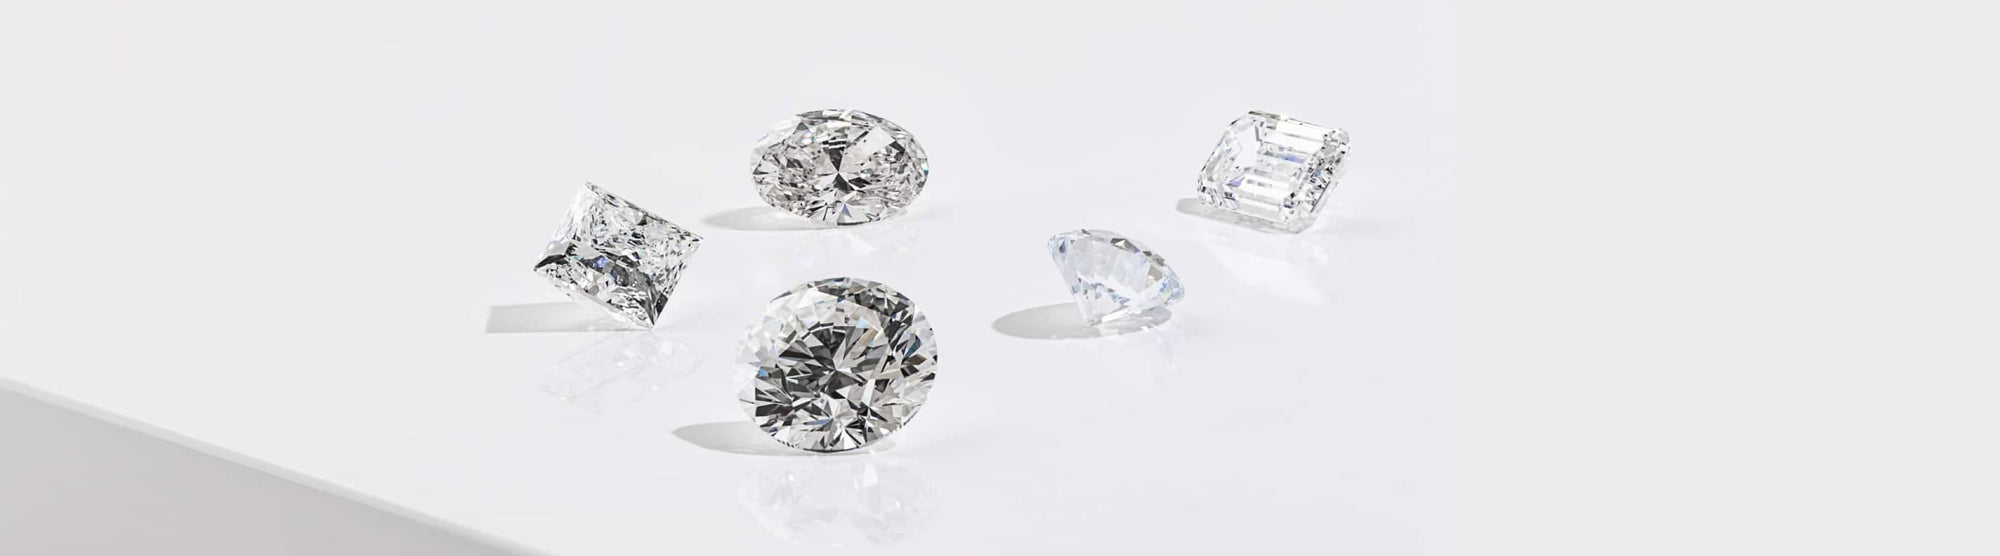 Do lab-grown diamonds test positive on diamond tests?